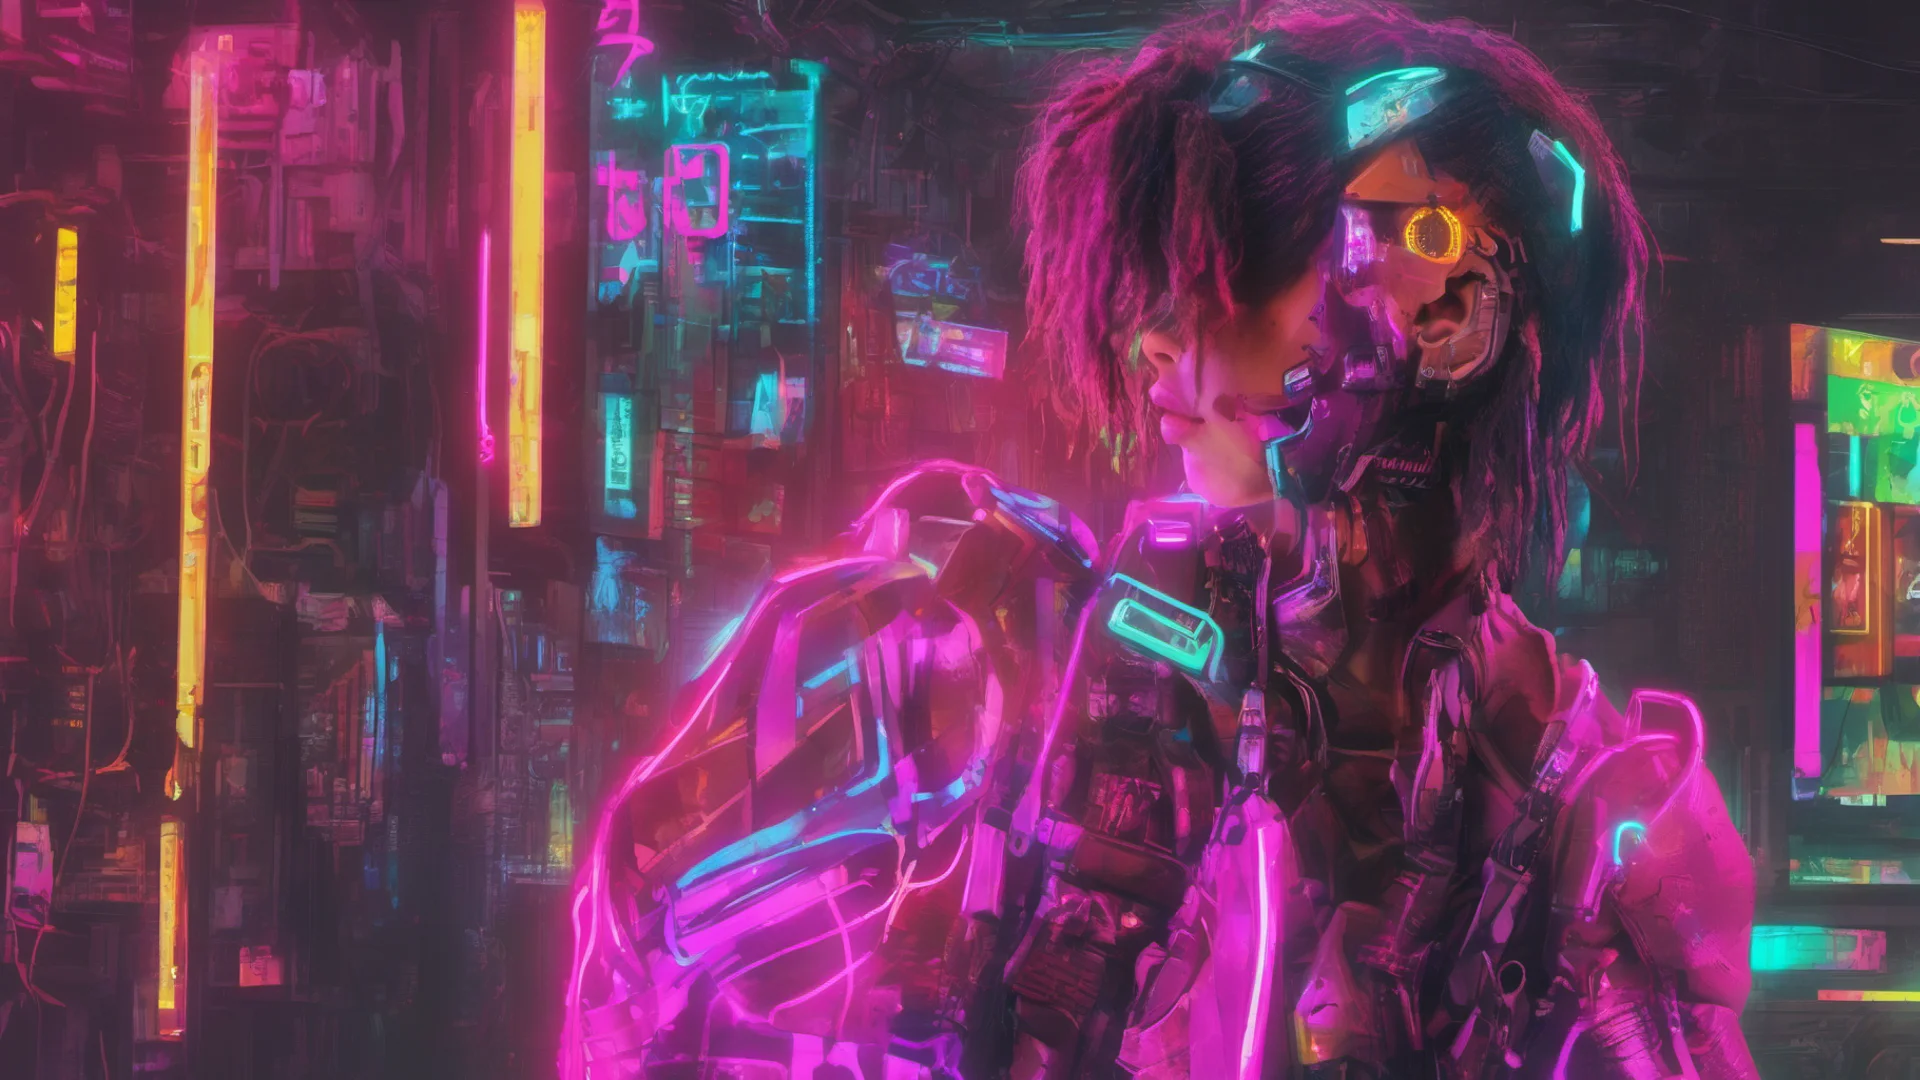 cyberpunk neon  female amazing awesome portrait 2 wide